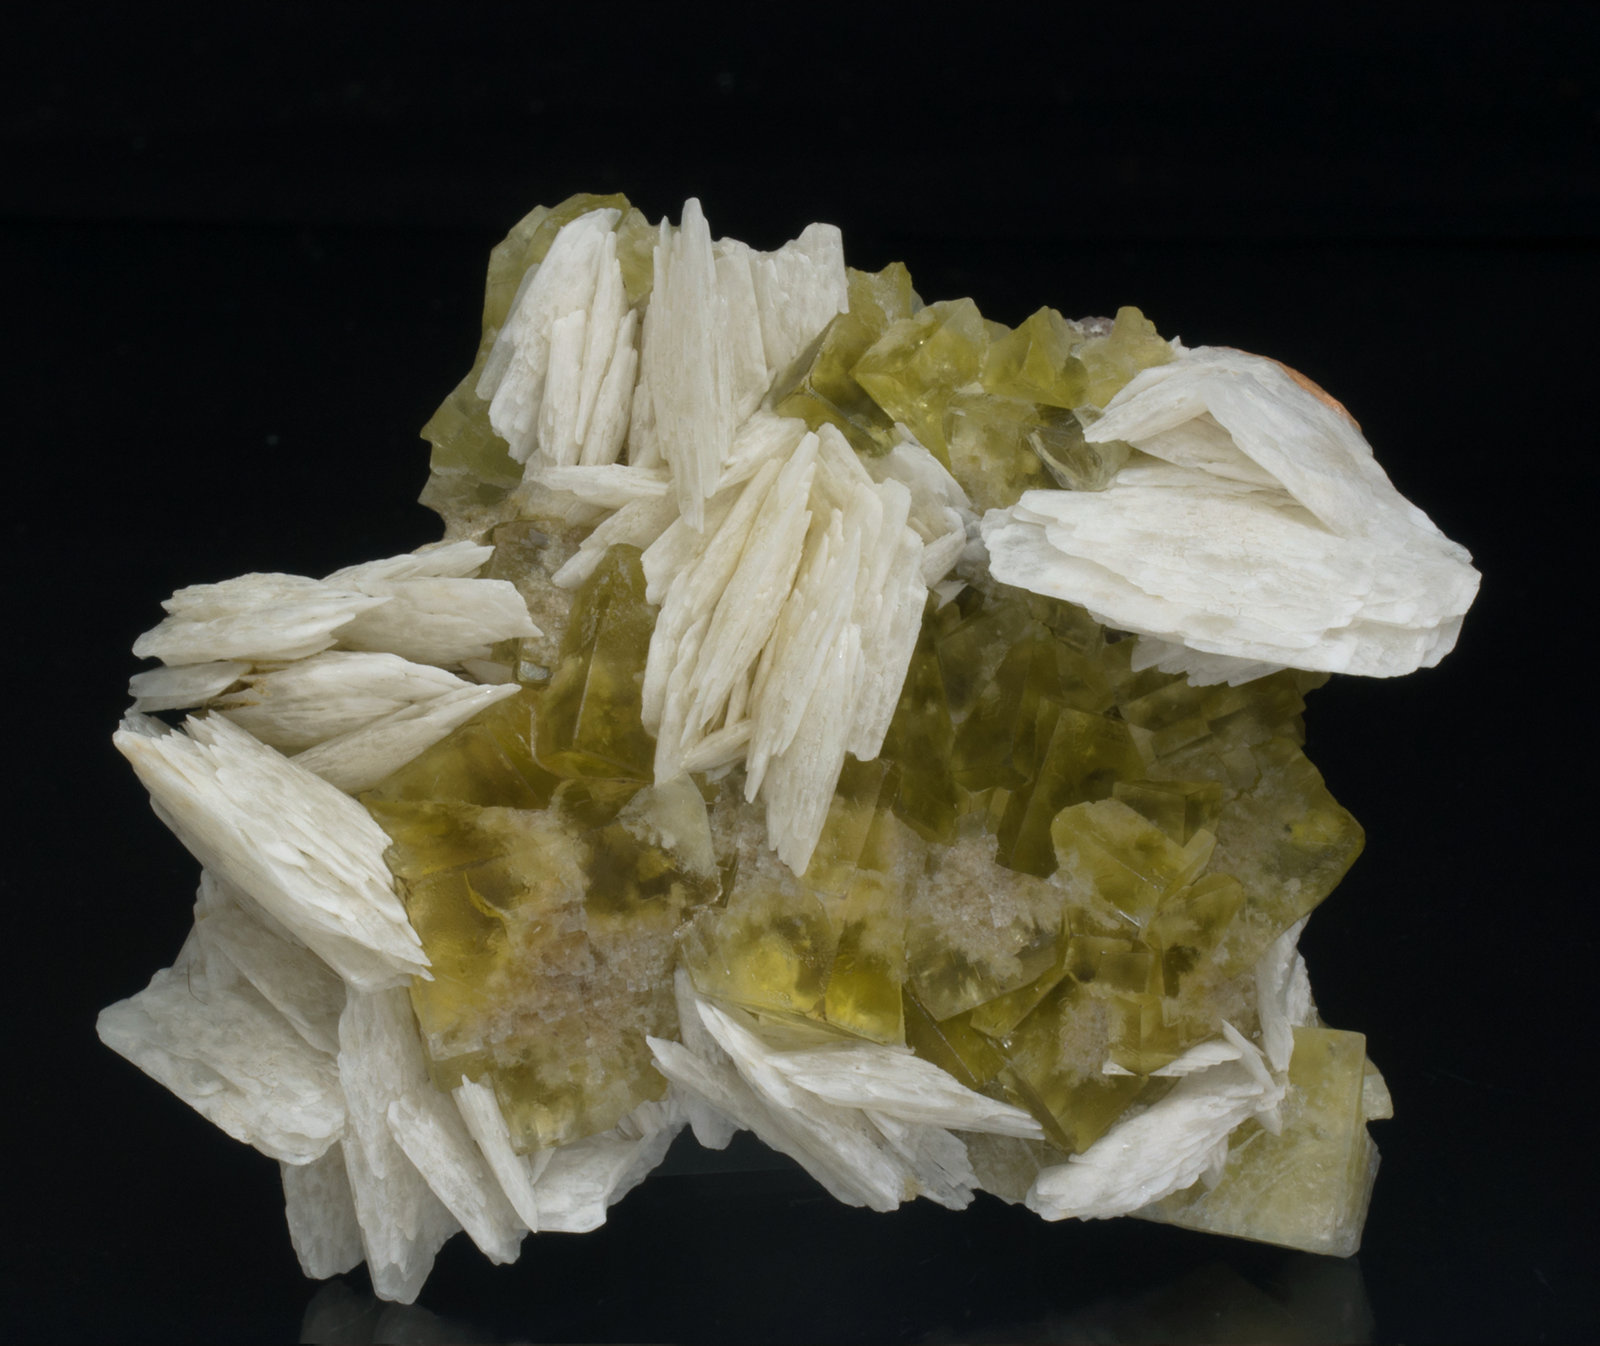 specimens/s_imagesX7/Fluorite-TZ71X7f.jpg